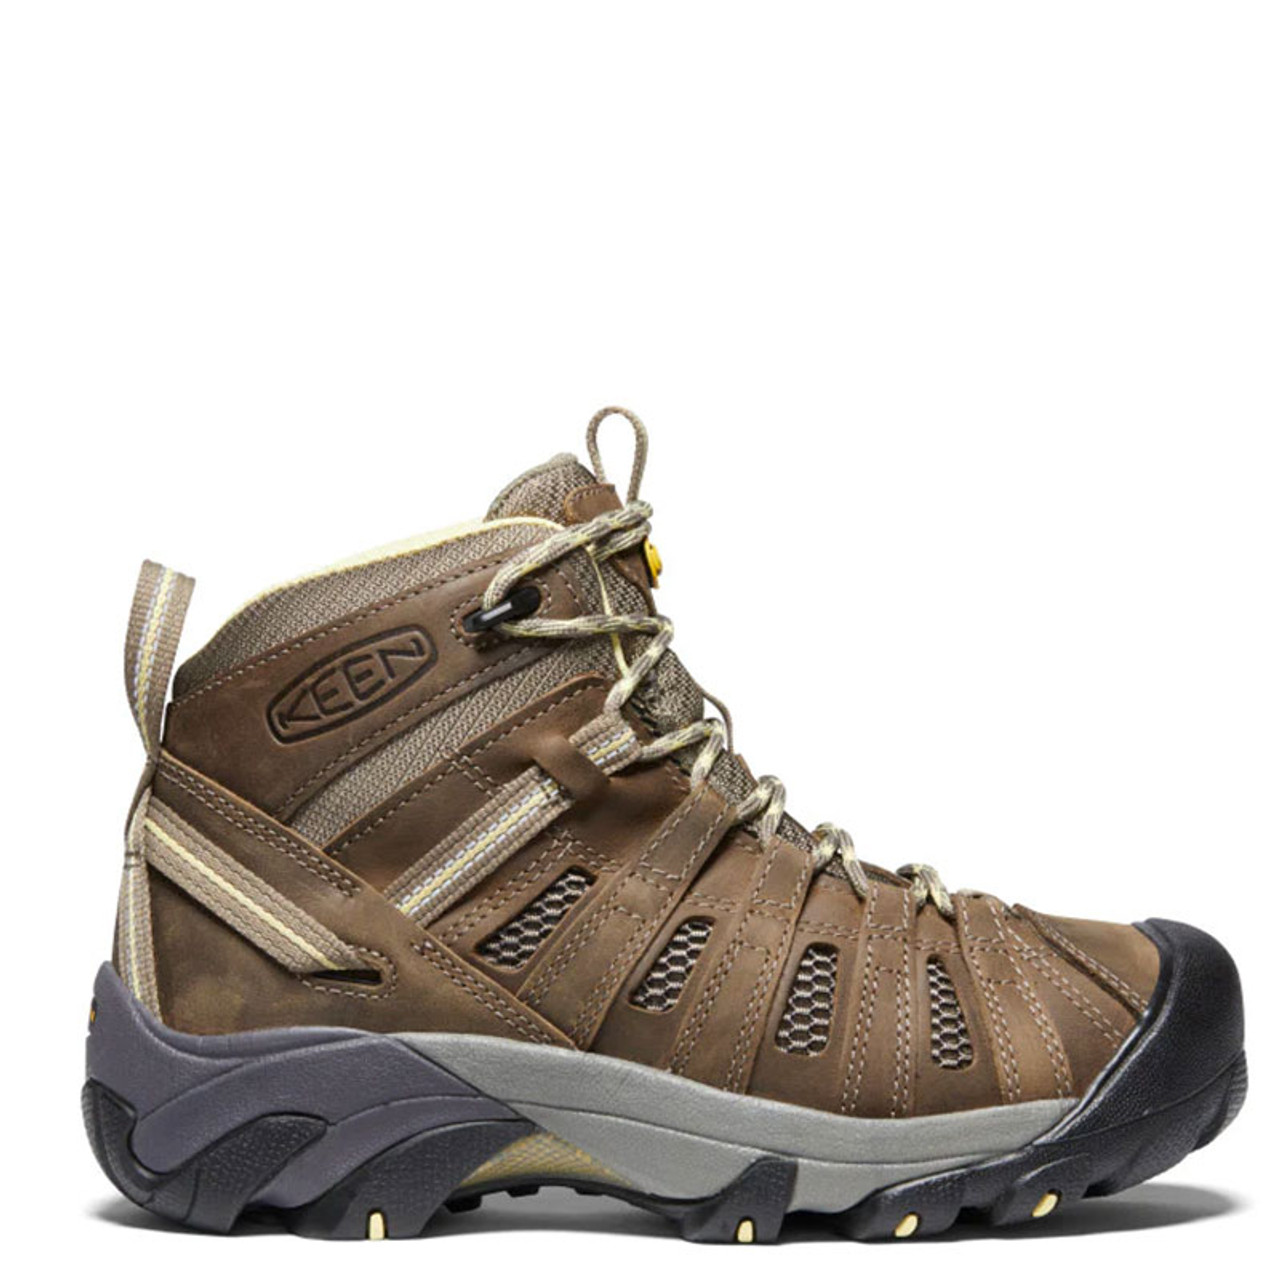 Keen 1010138 Voyageur Women's Mid Hiking Boots Brindle Custard